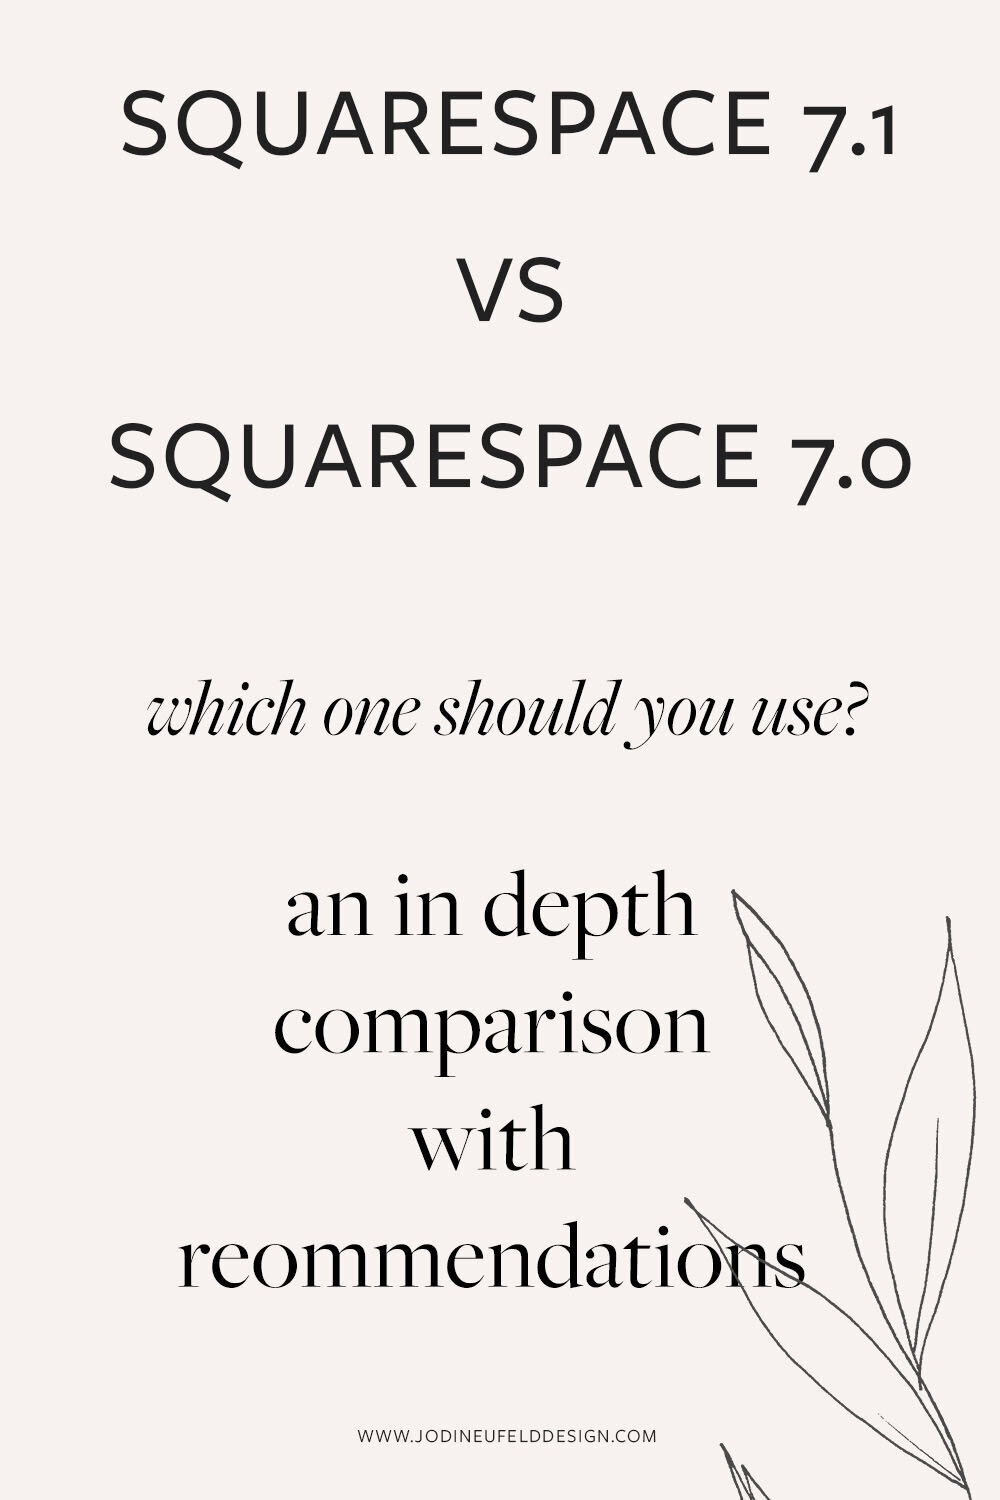 Squarespace 7.1 vs Squarespace 7.0 - which should you use? | Jodi Neufeld Design Squarespace web designer